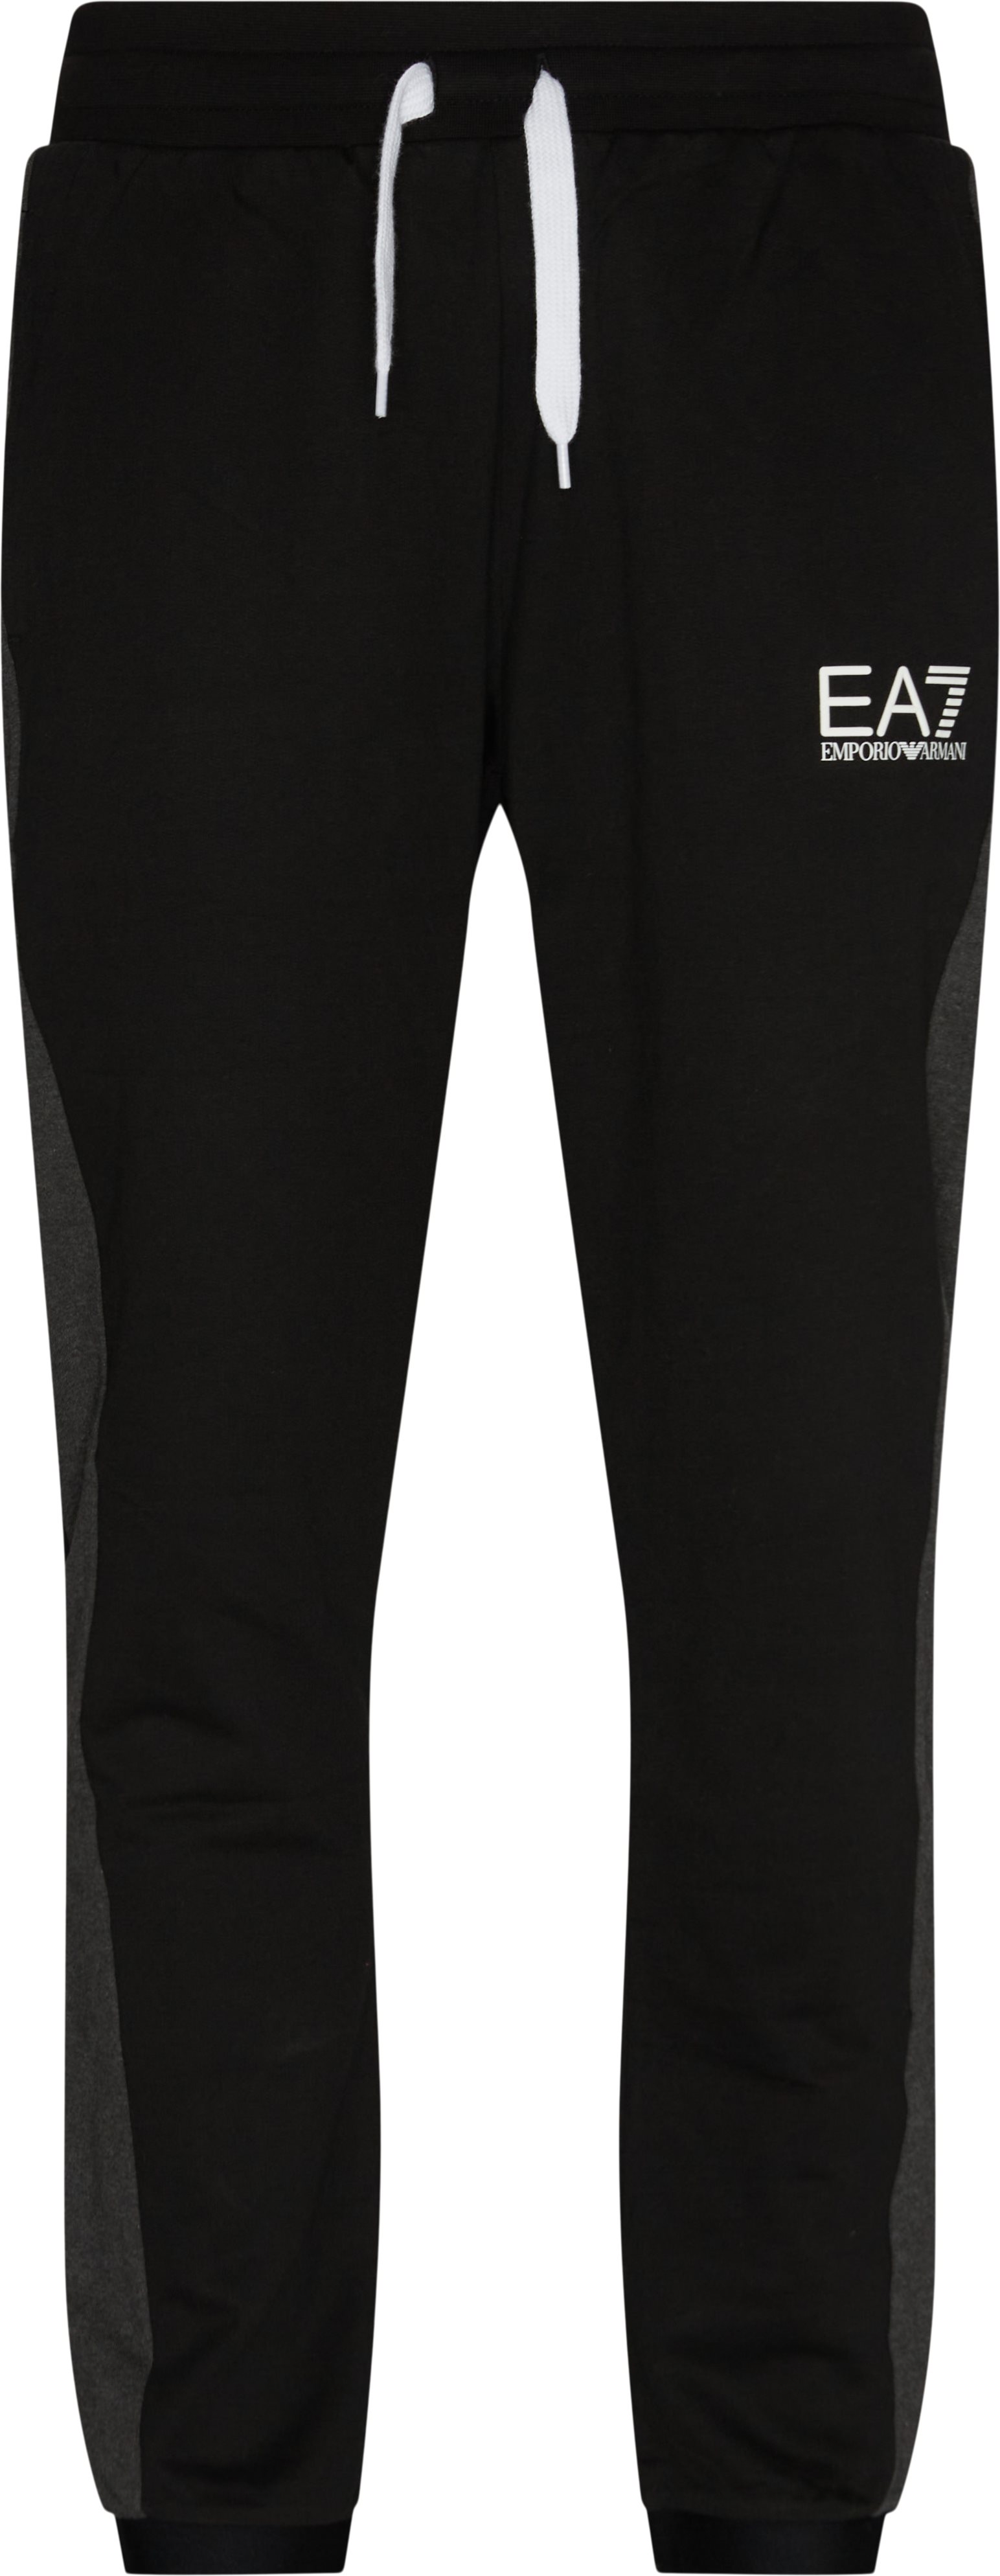 PJ05Z-6KPV64 Sweatpants - Trousers - Regular fit - Black